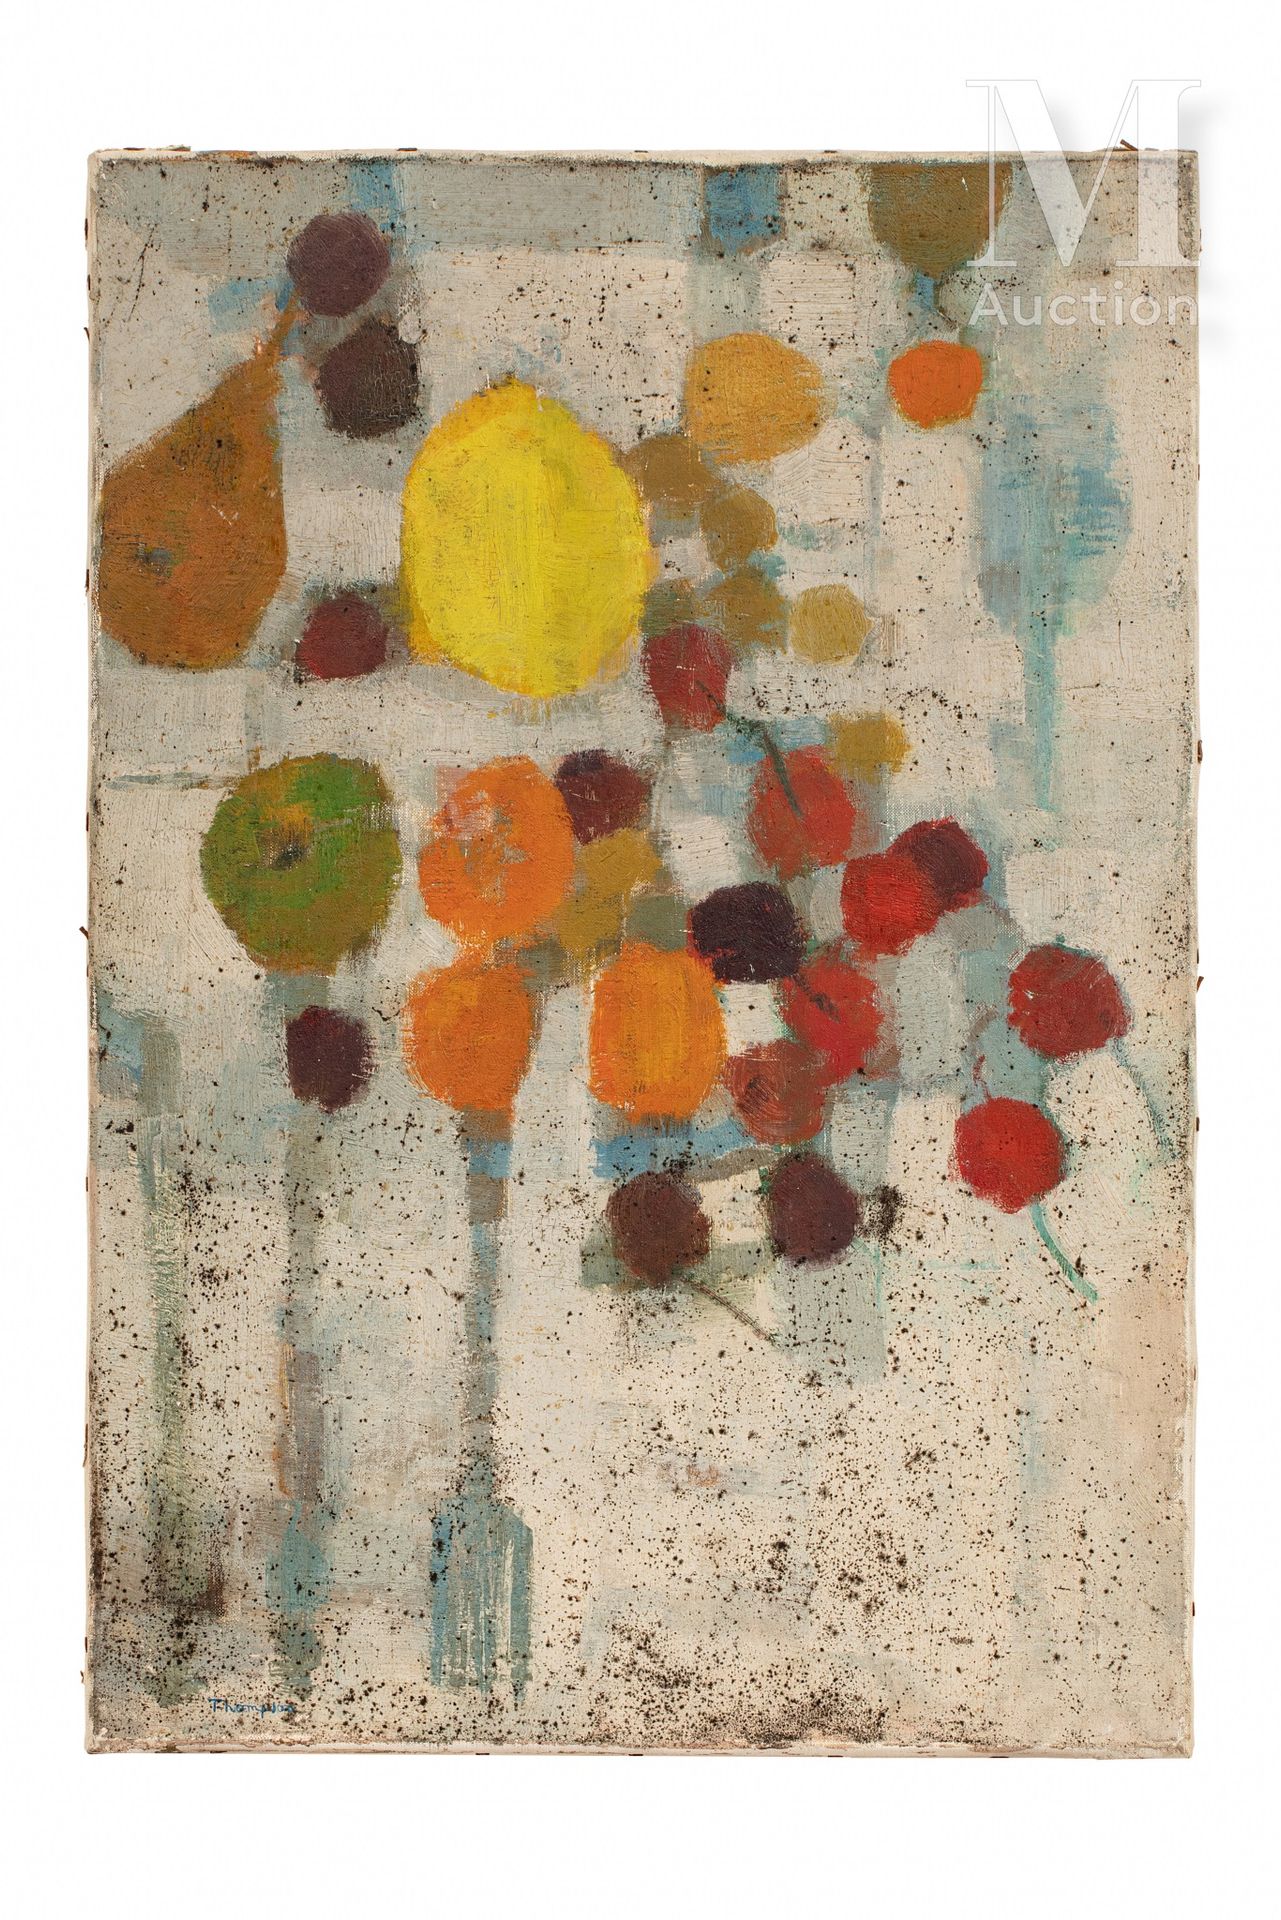 Michel THOMPSON (1921-2007) 
无题





布面油画，左下角有签名





54,5 x 37,5 cm











&hellip;